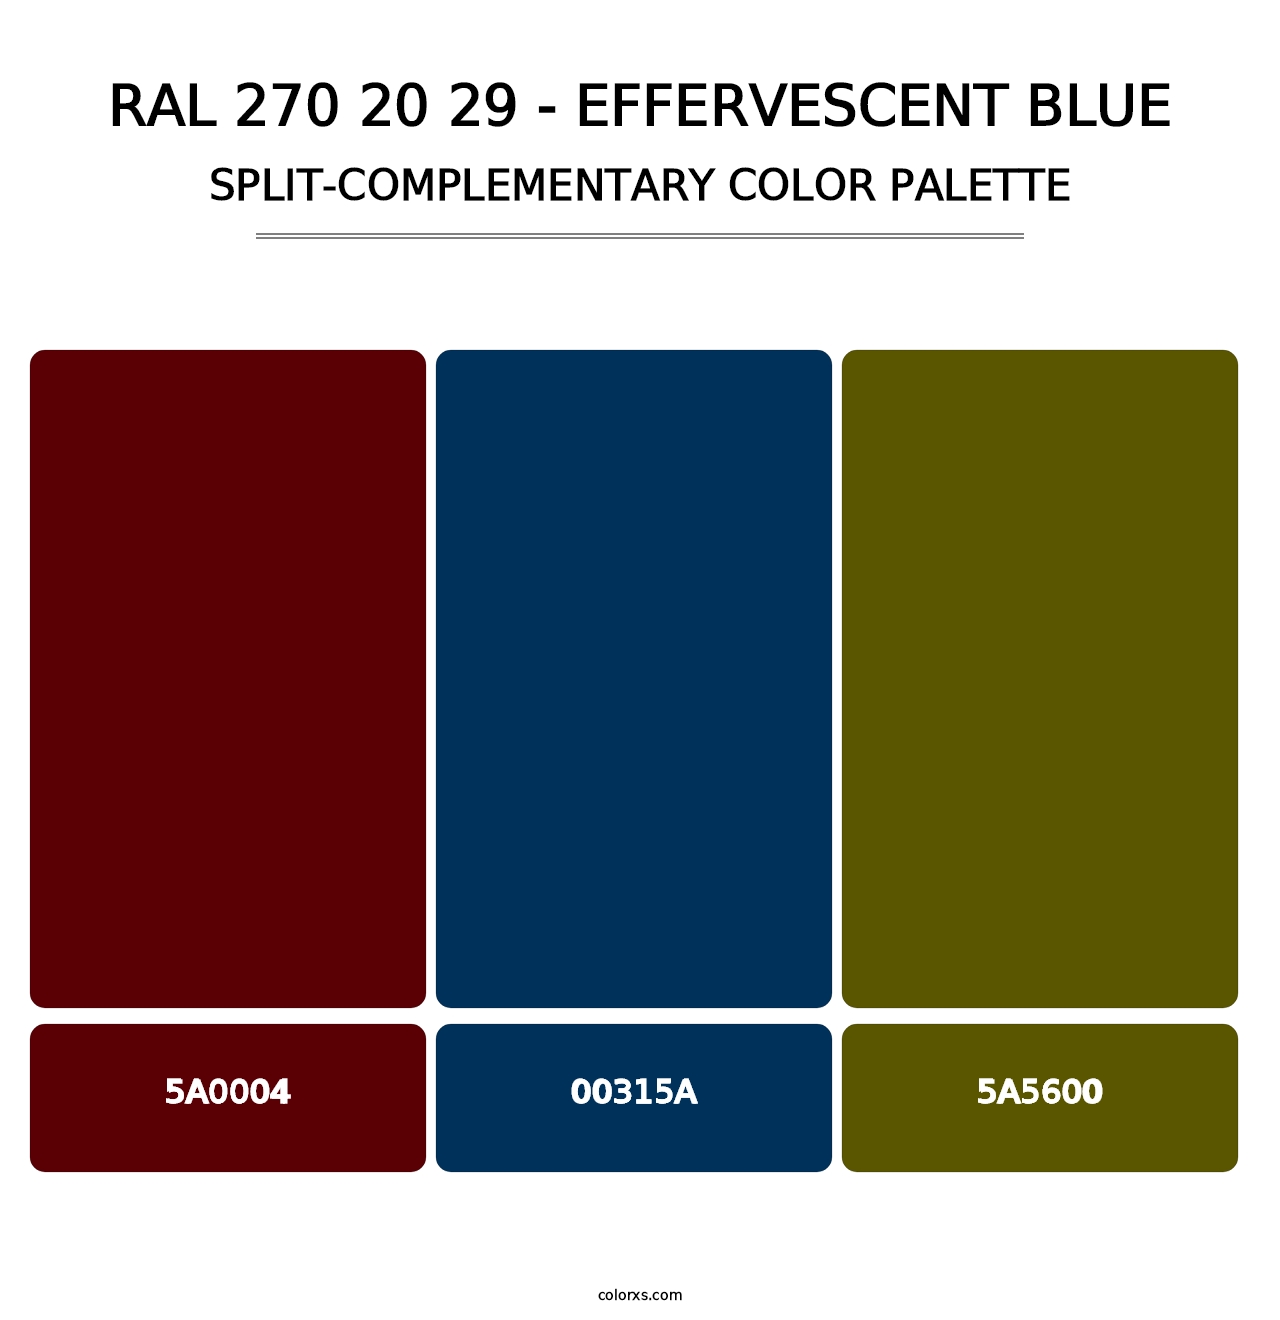 RAL 270 20 29 - Effervescent Blue - Split-Complementary Color Palette